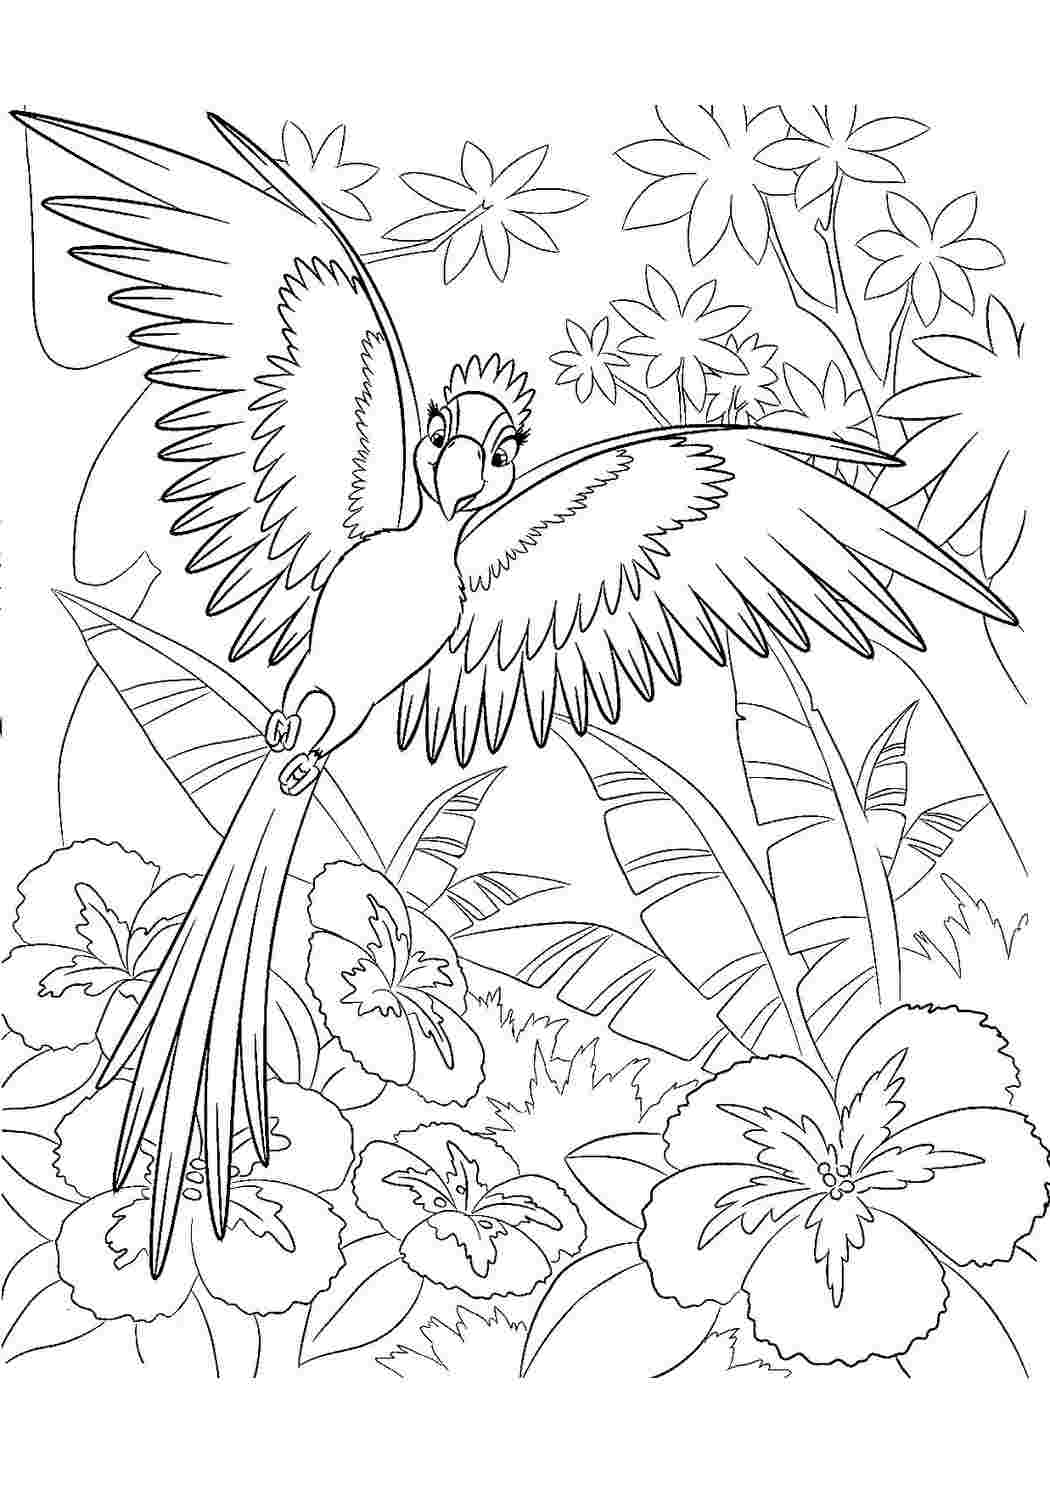 Картинки попугаев для срисовки - 82 фото